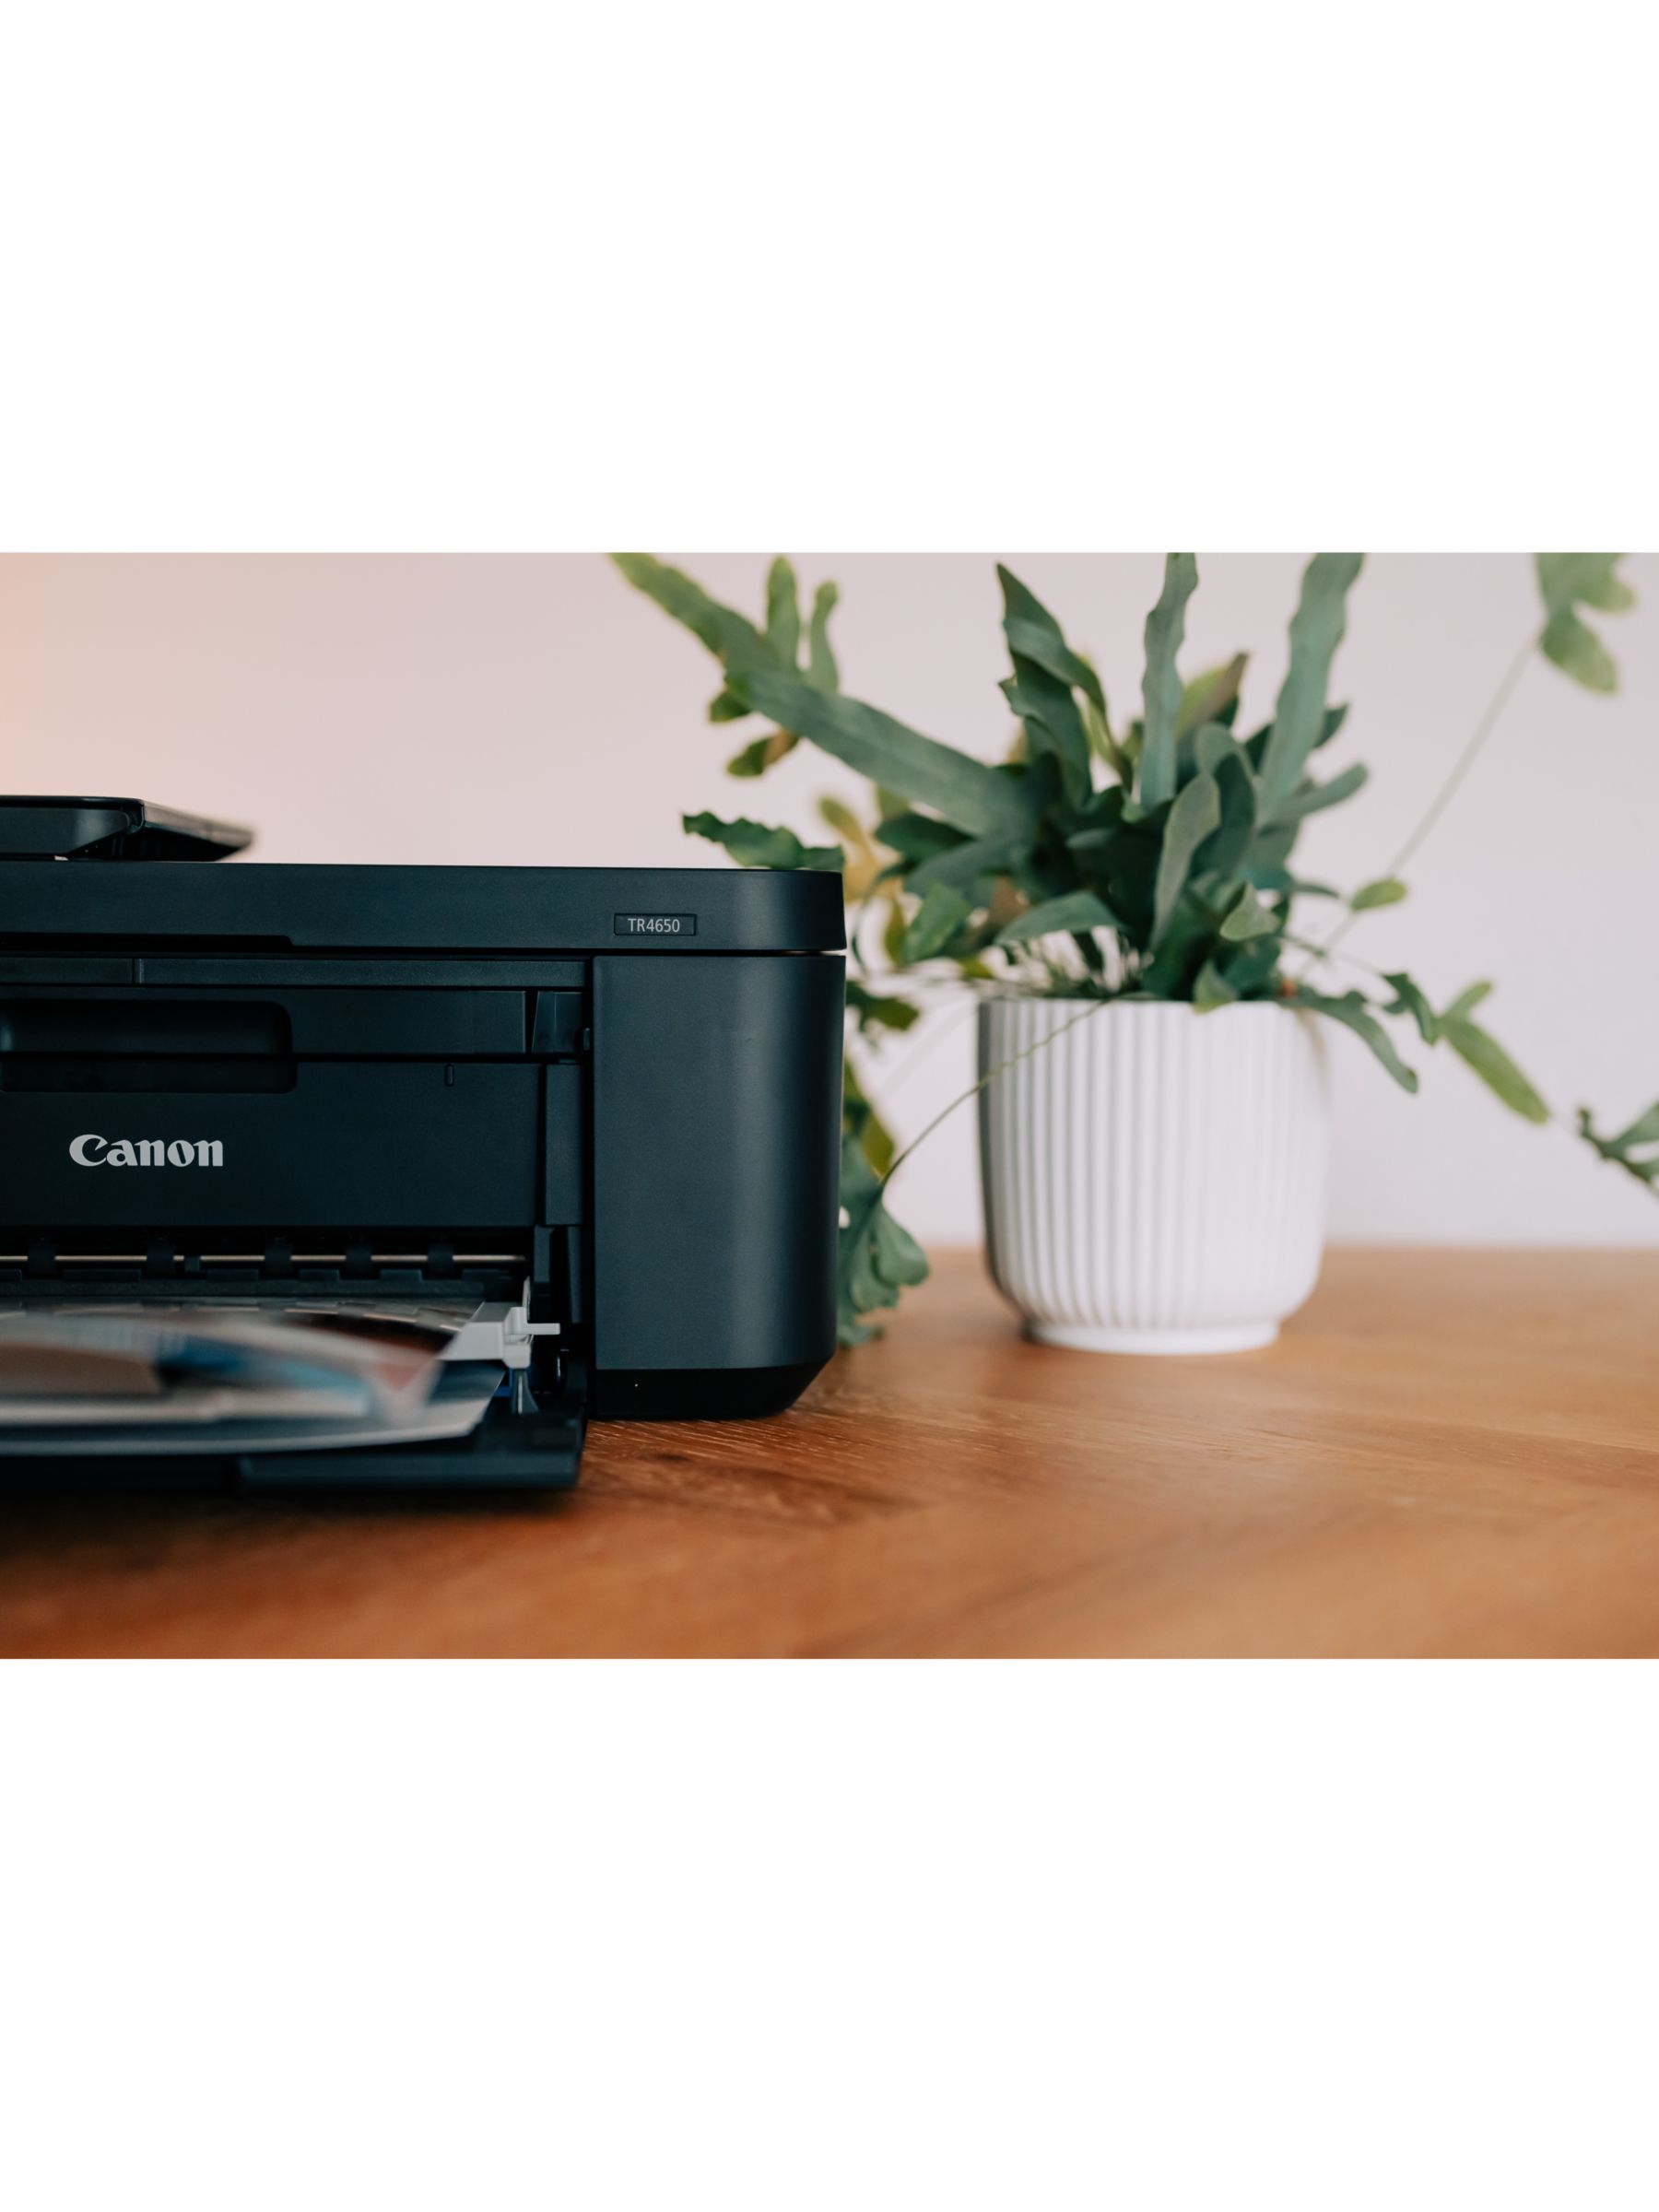 Canon Pixma TR4650 Multifunction Printer Black